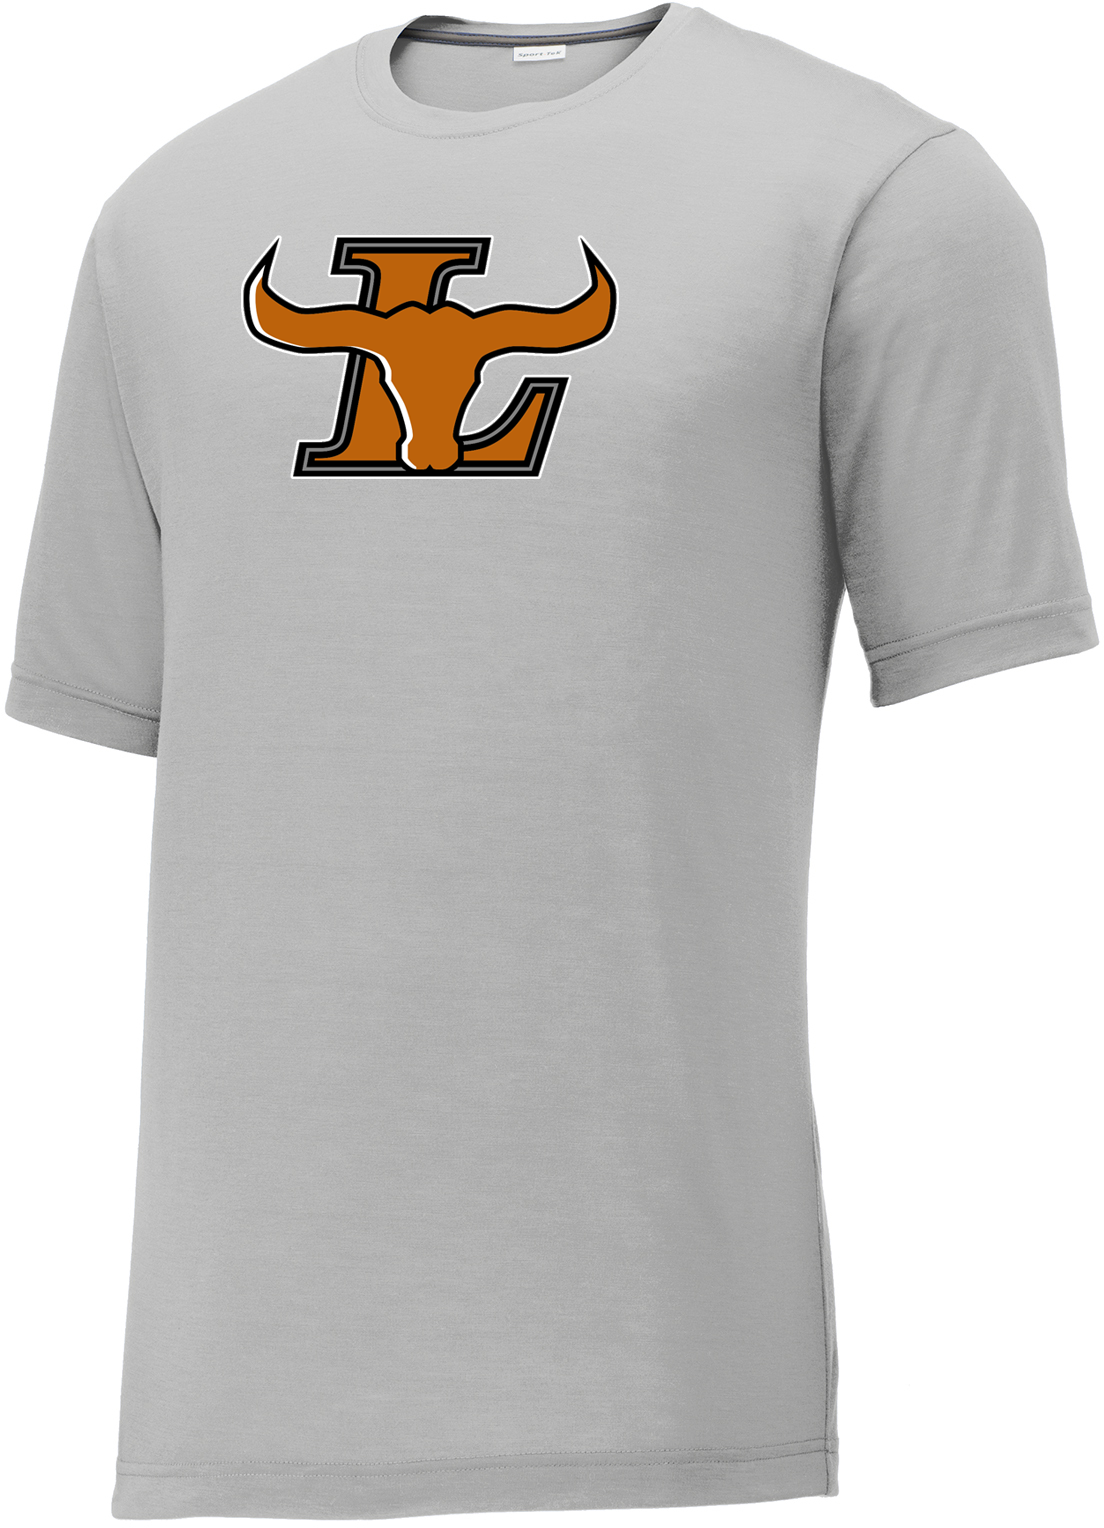 Lanier Baseball CottonTouch Performance T-Shirt